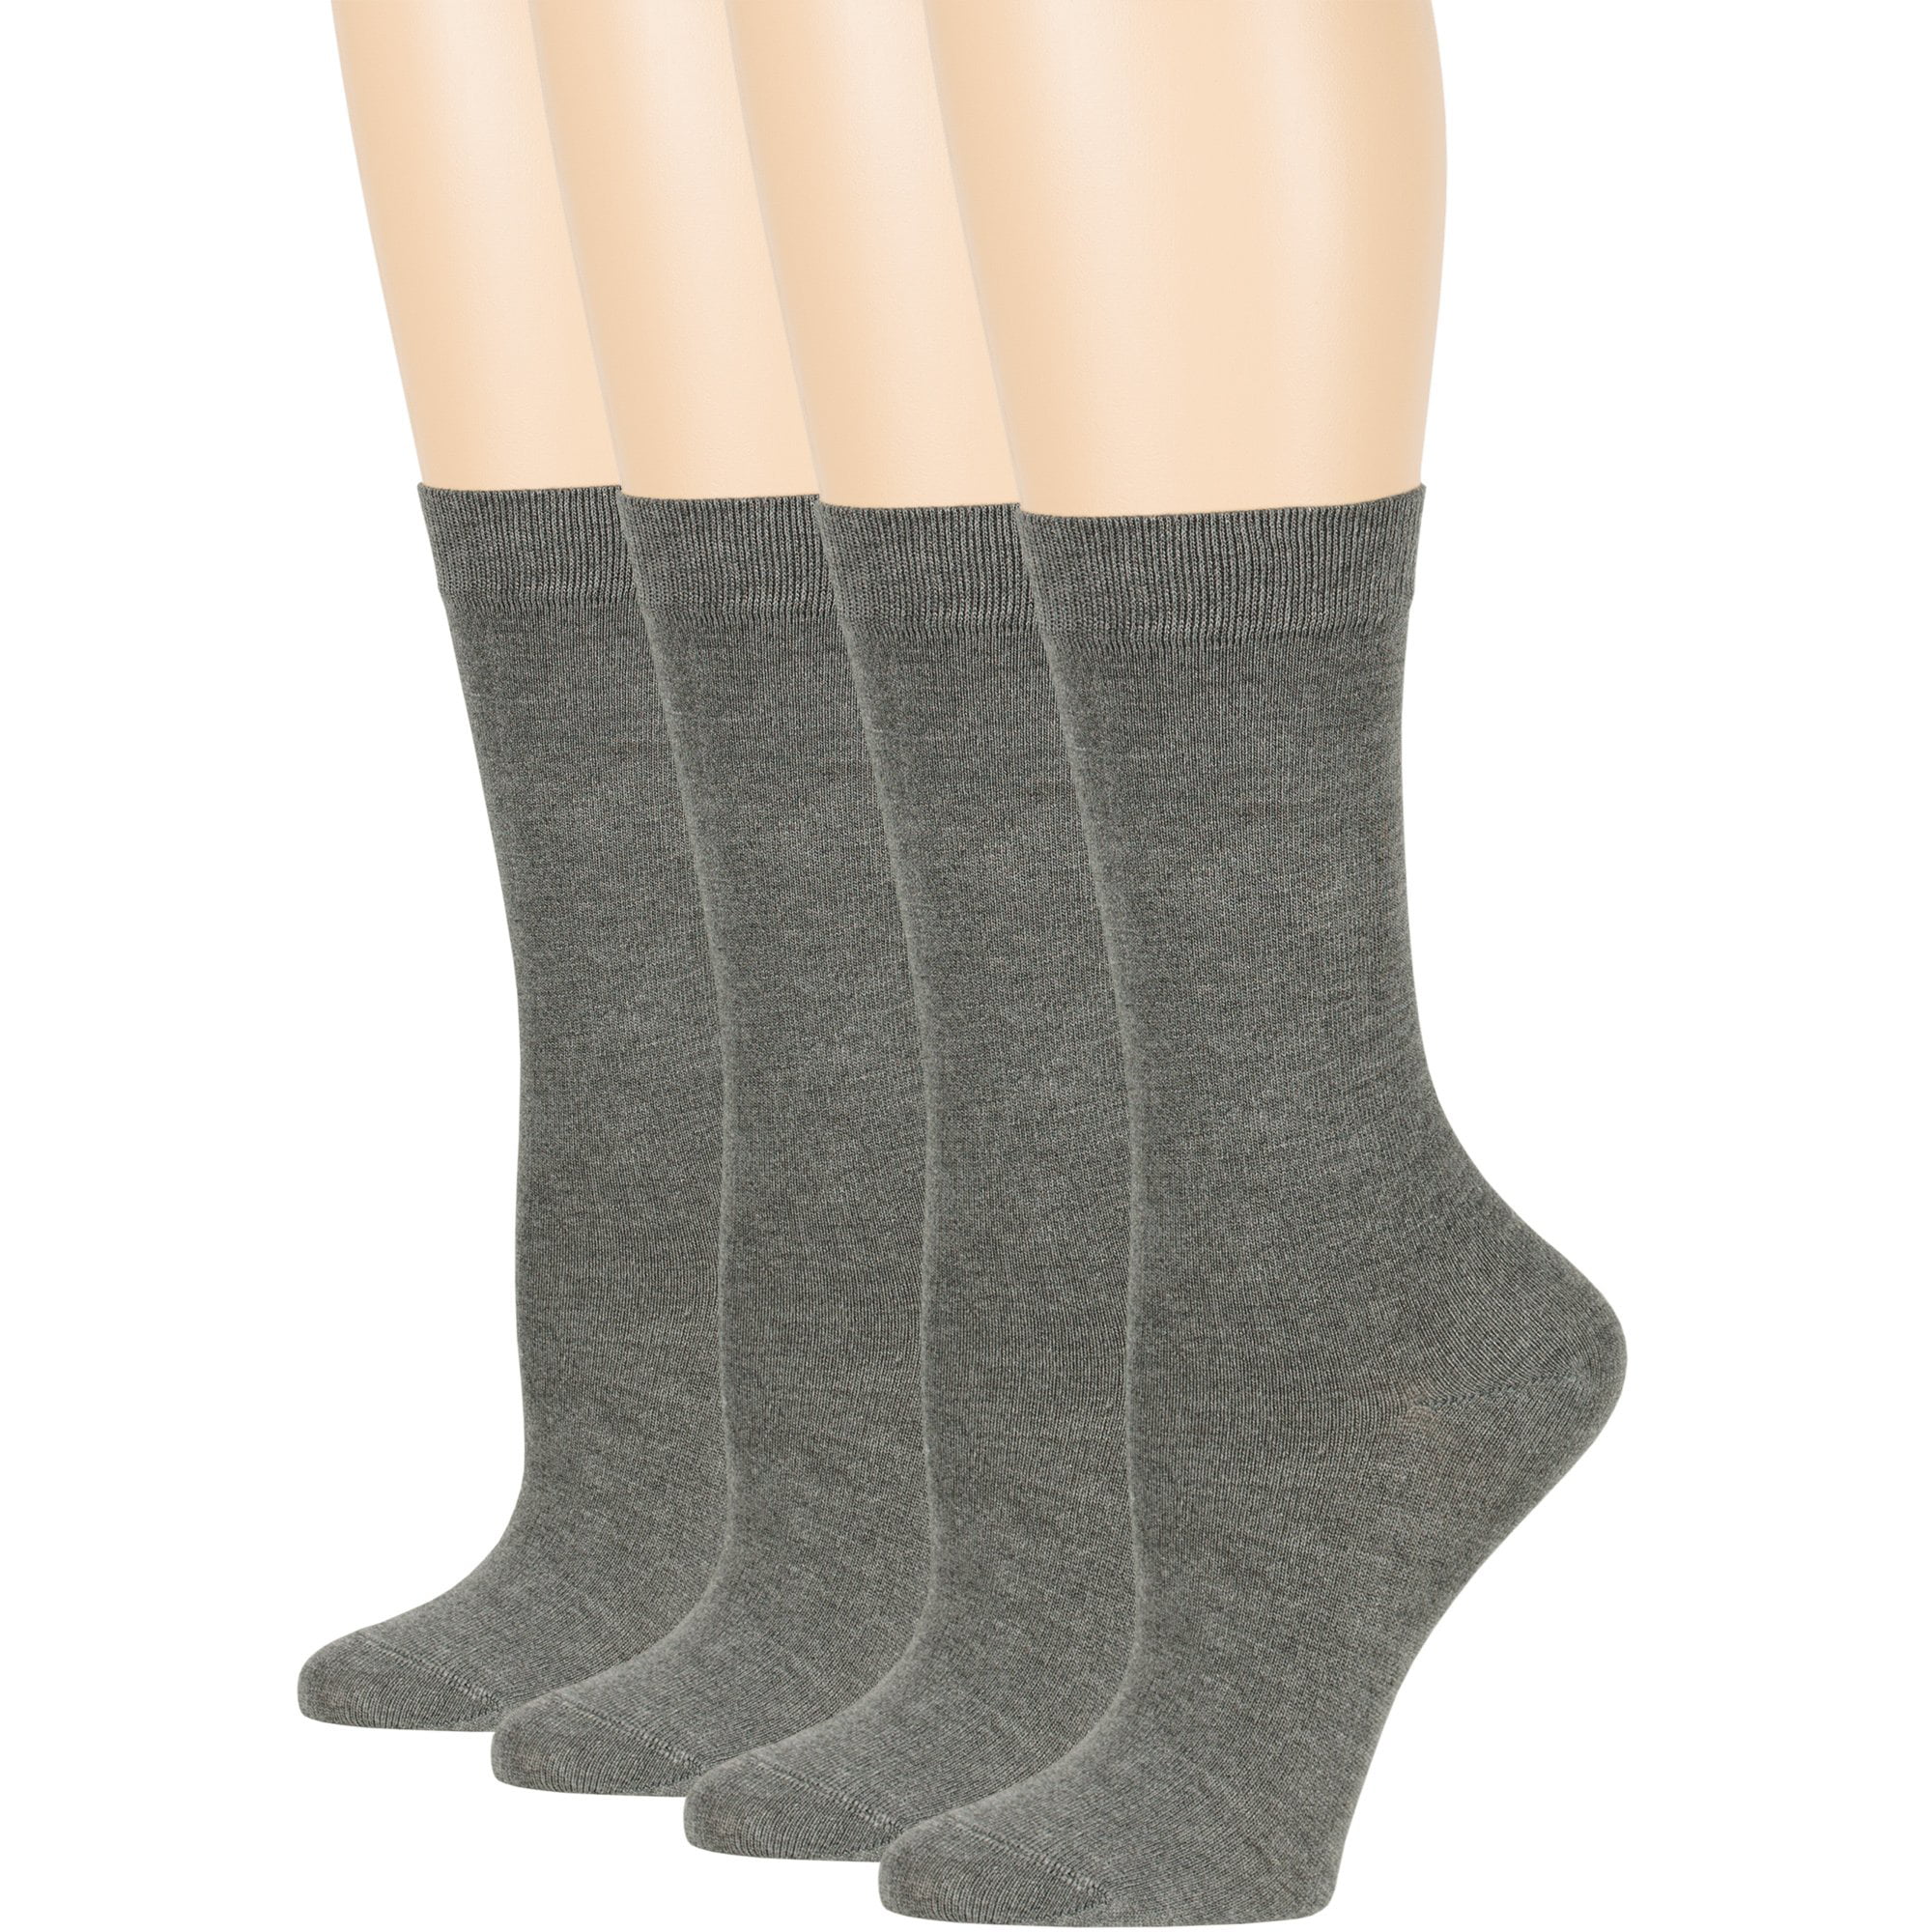 Women's Bamboo Casual Crew Socks, Dark Grey, Medium 9-11, 4 Pack